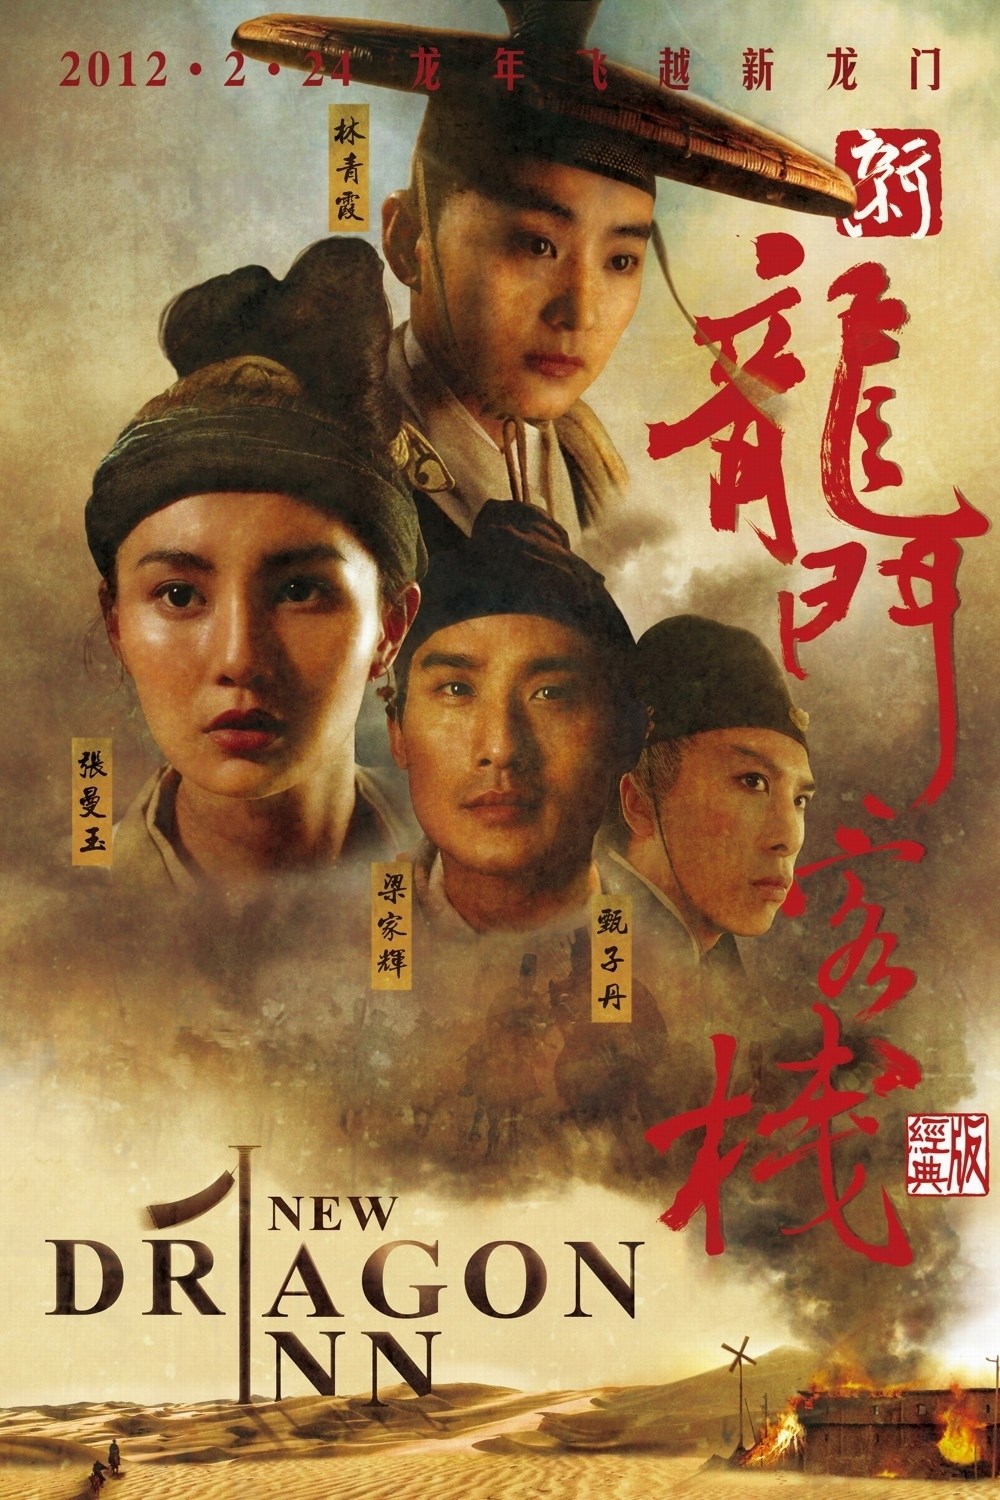 Long khong 1 full movie download